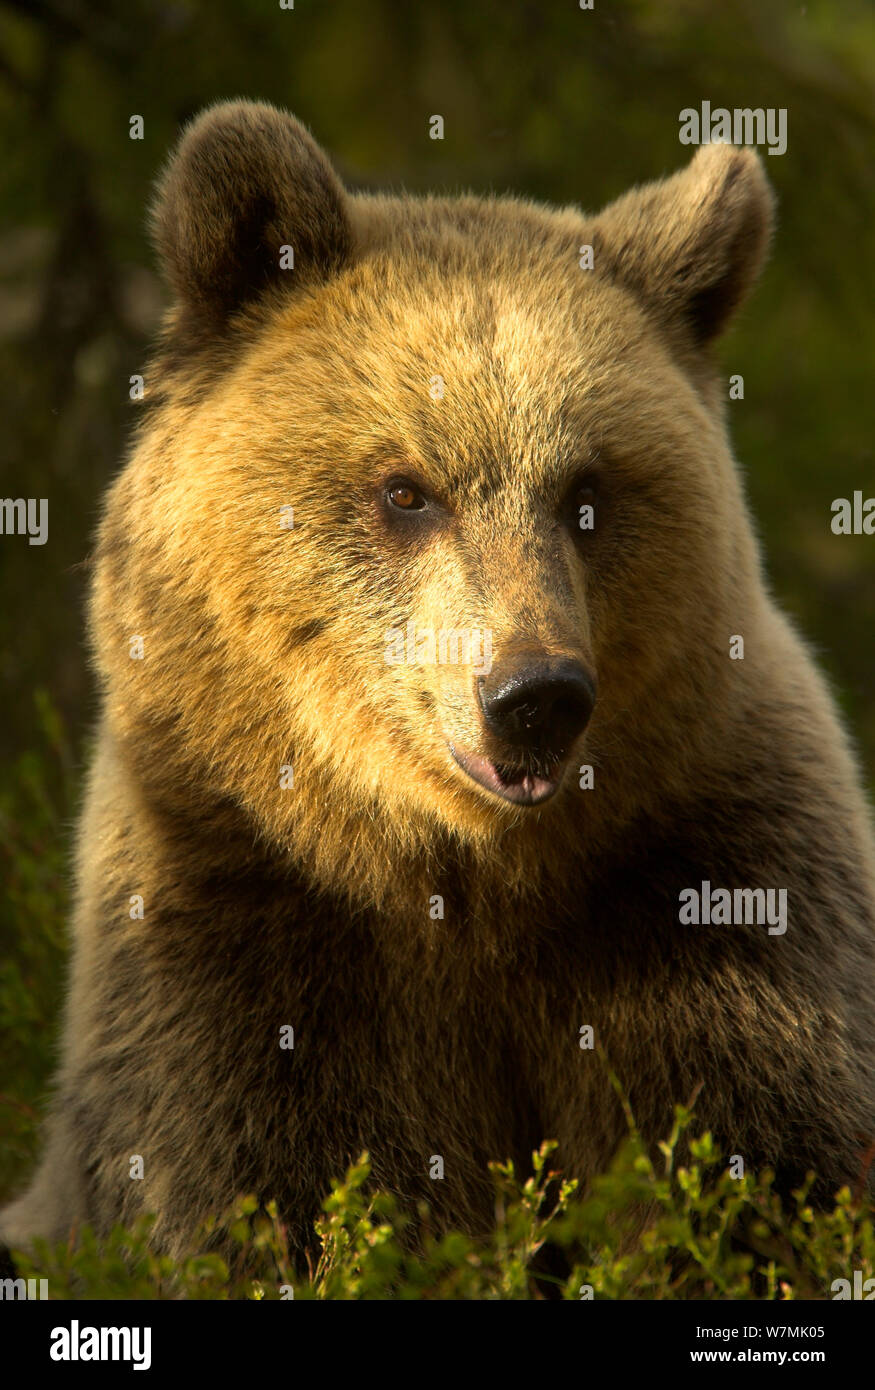 Brown Bear (Ursus arctos) portrait. Finland, Europe, June. Stock Photo